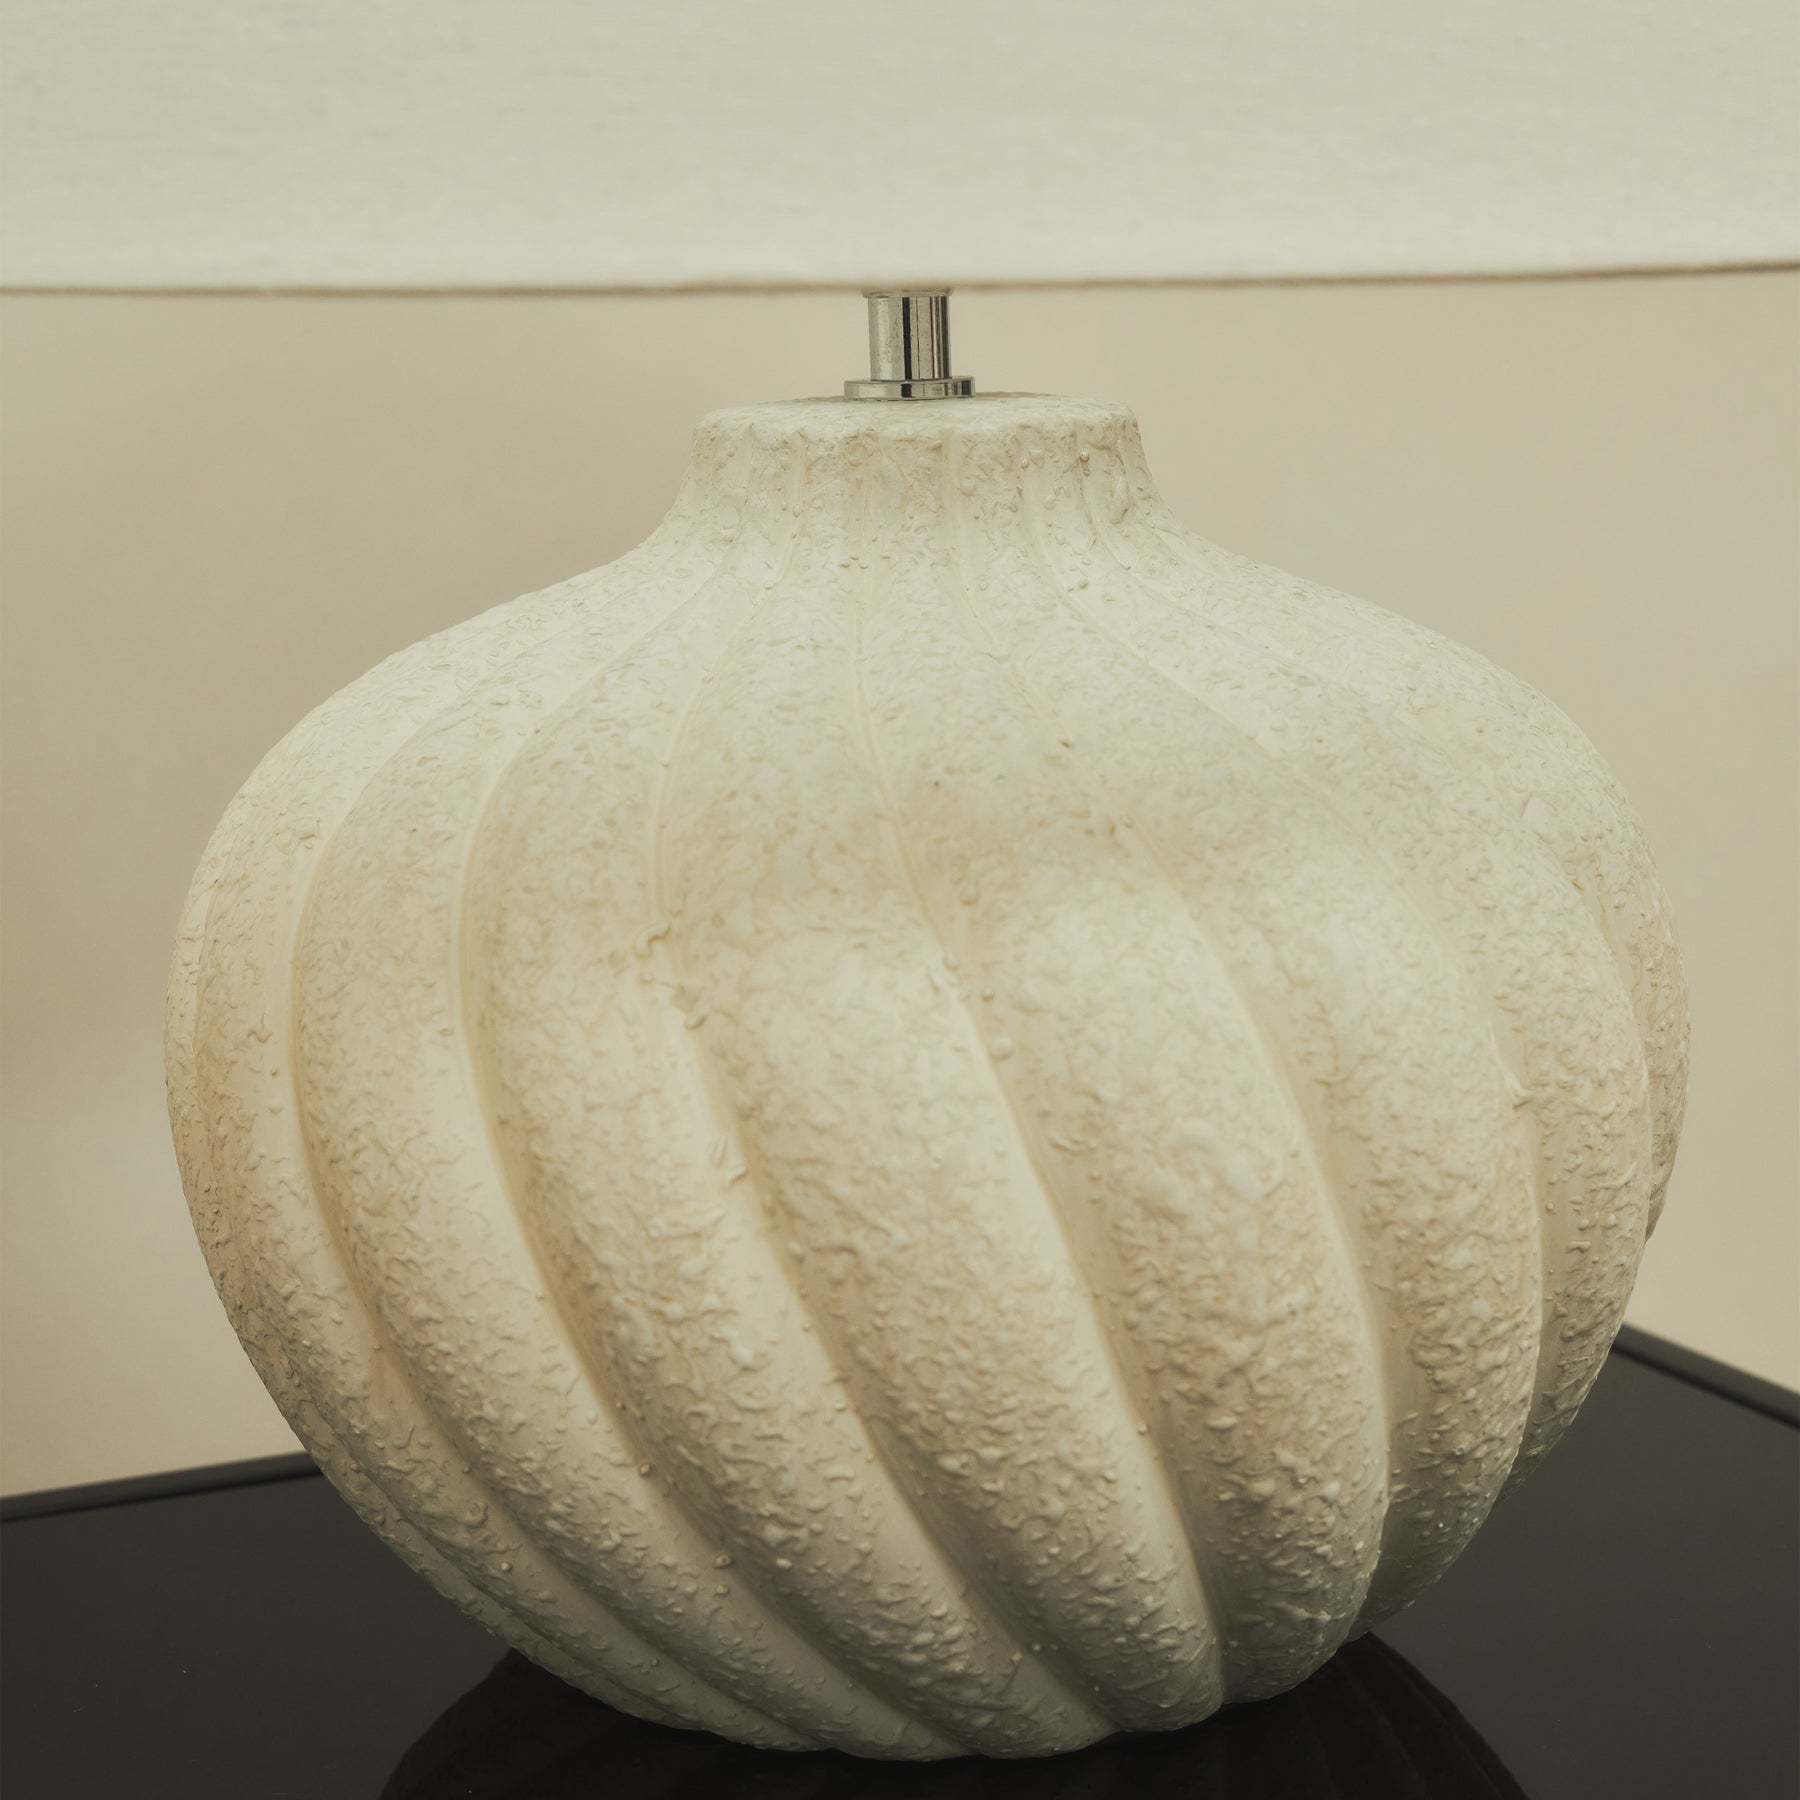 Textured ceramic based table lamp natural shade detail shot